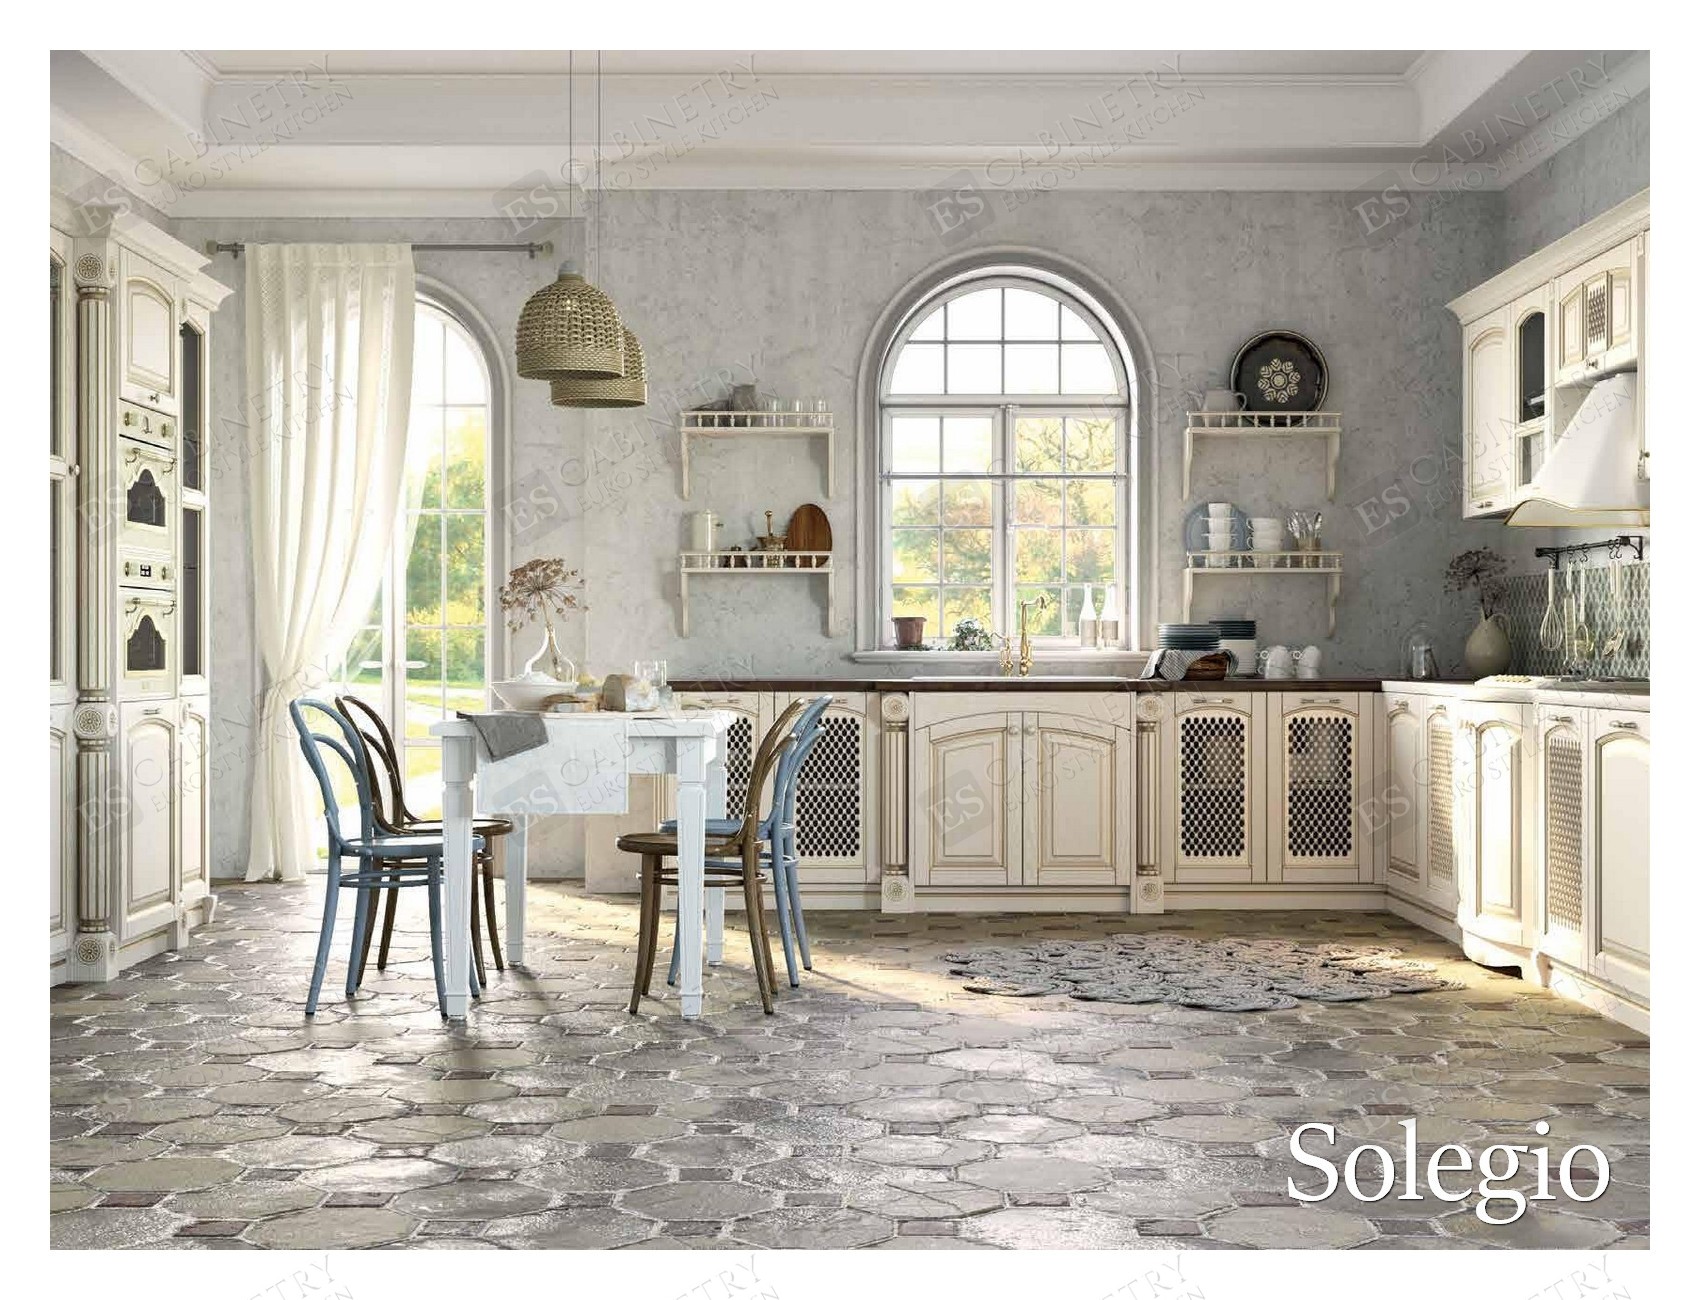 Solegio | European kitchen design